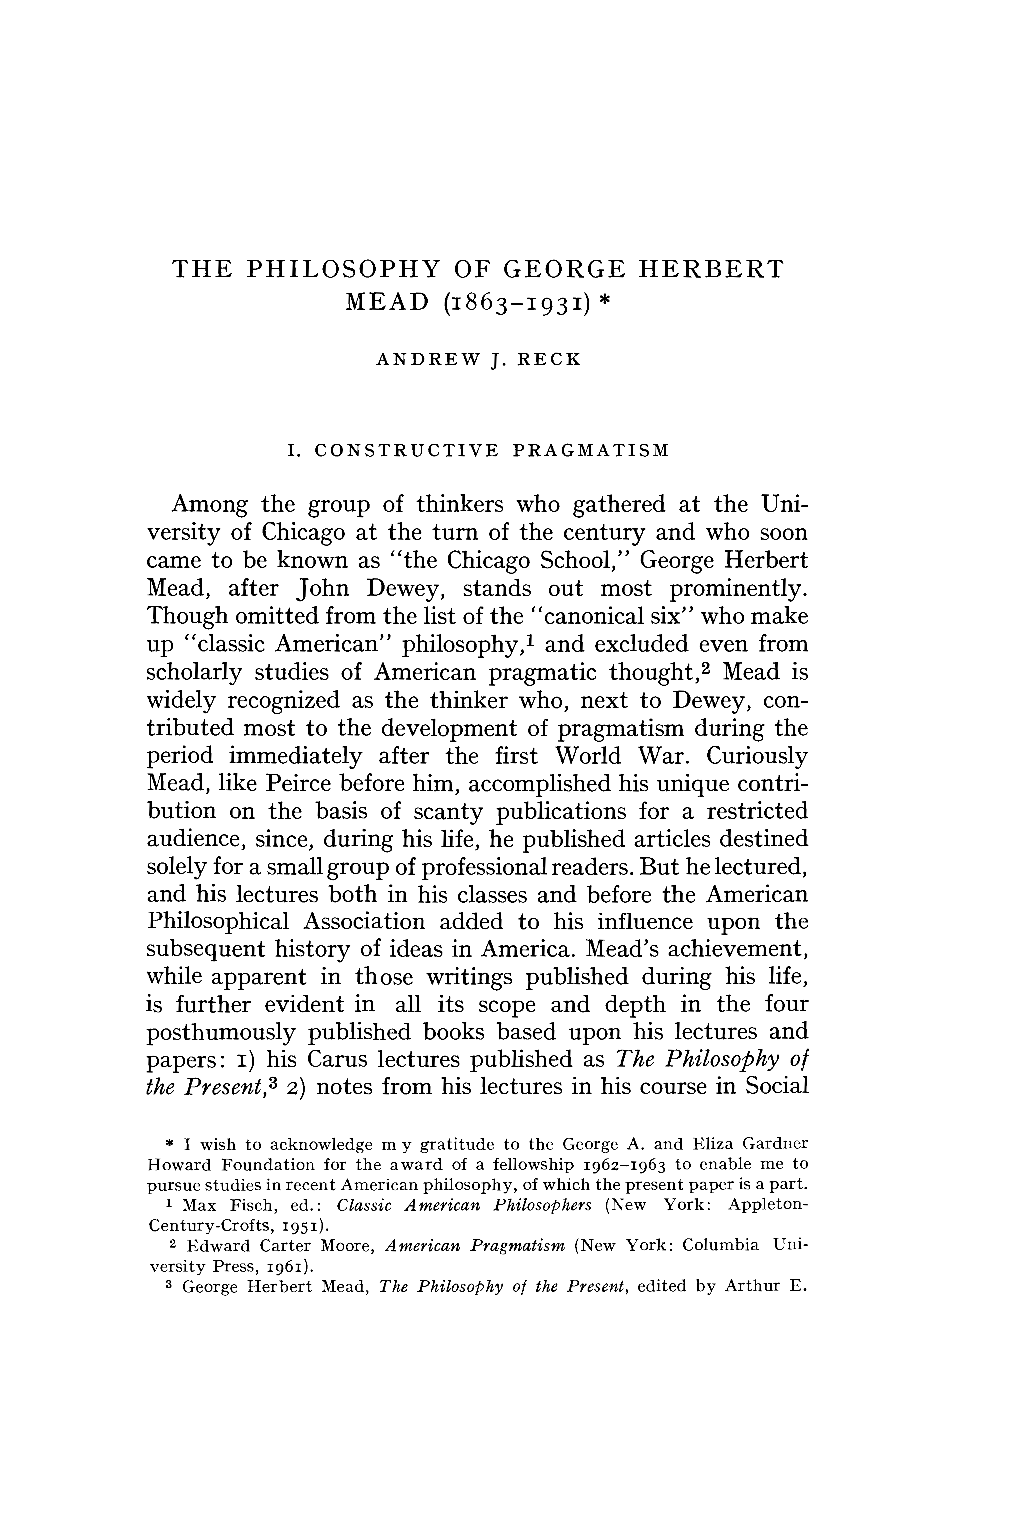 The Philosophy of George Herbert Mead (1863-1931) *